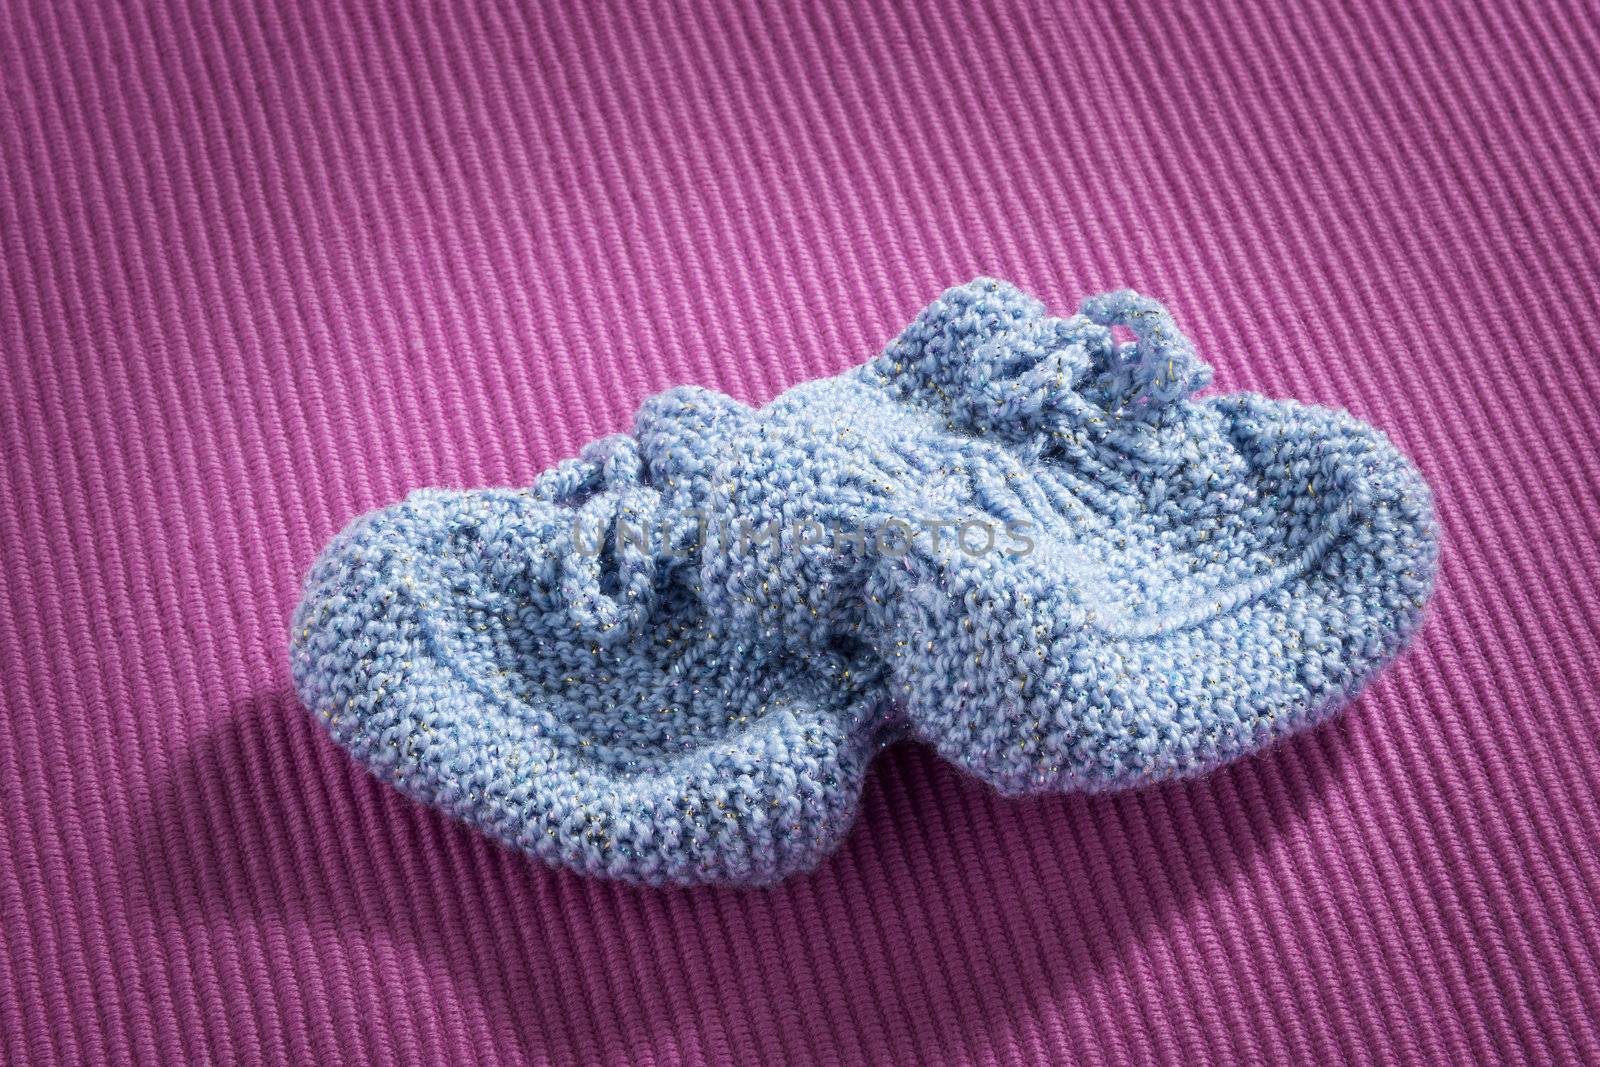 Blue baby socks on pink background